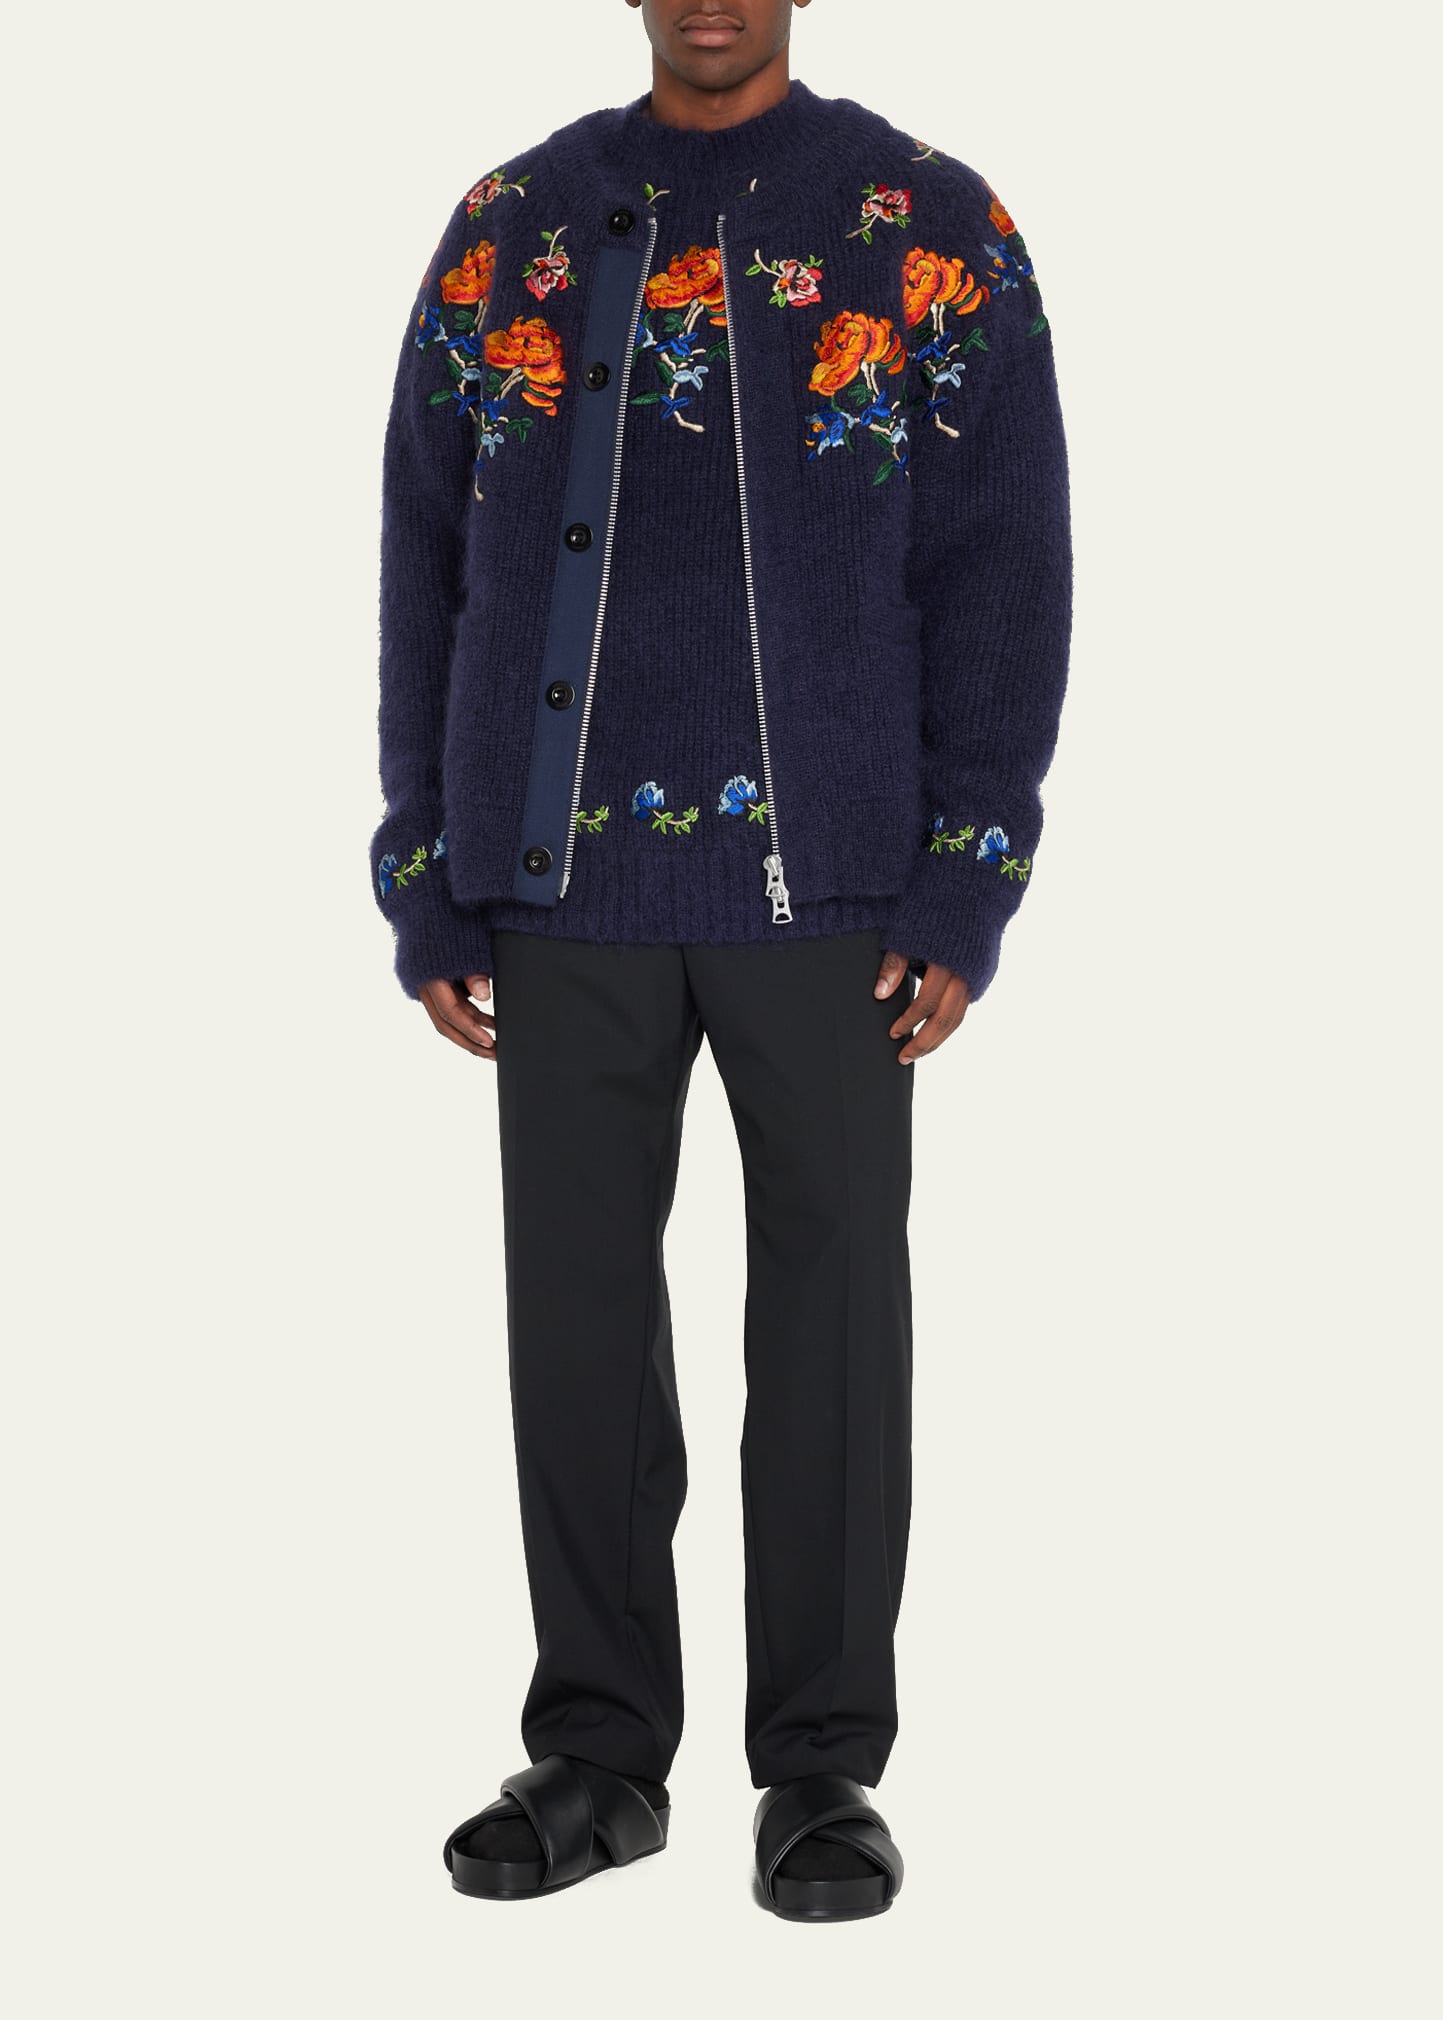 SACAI Men's Rose Embroidered Zip Blouson Jacket